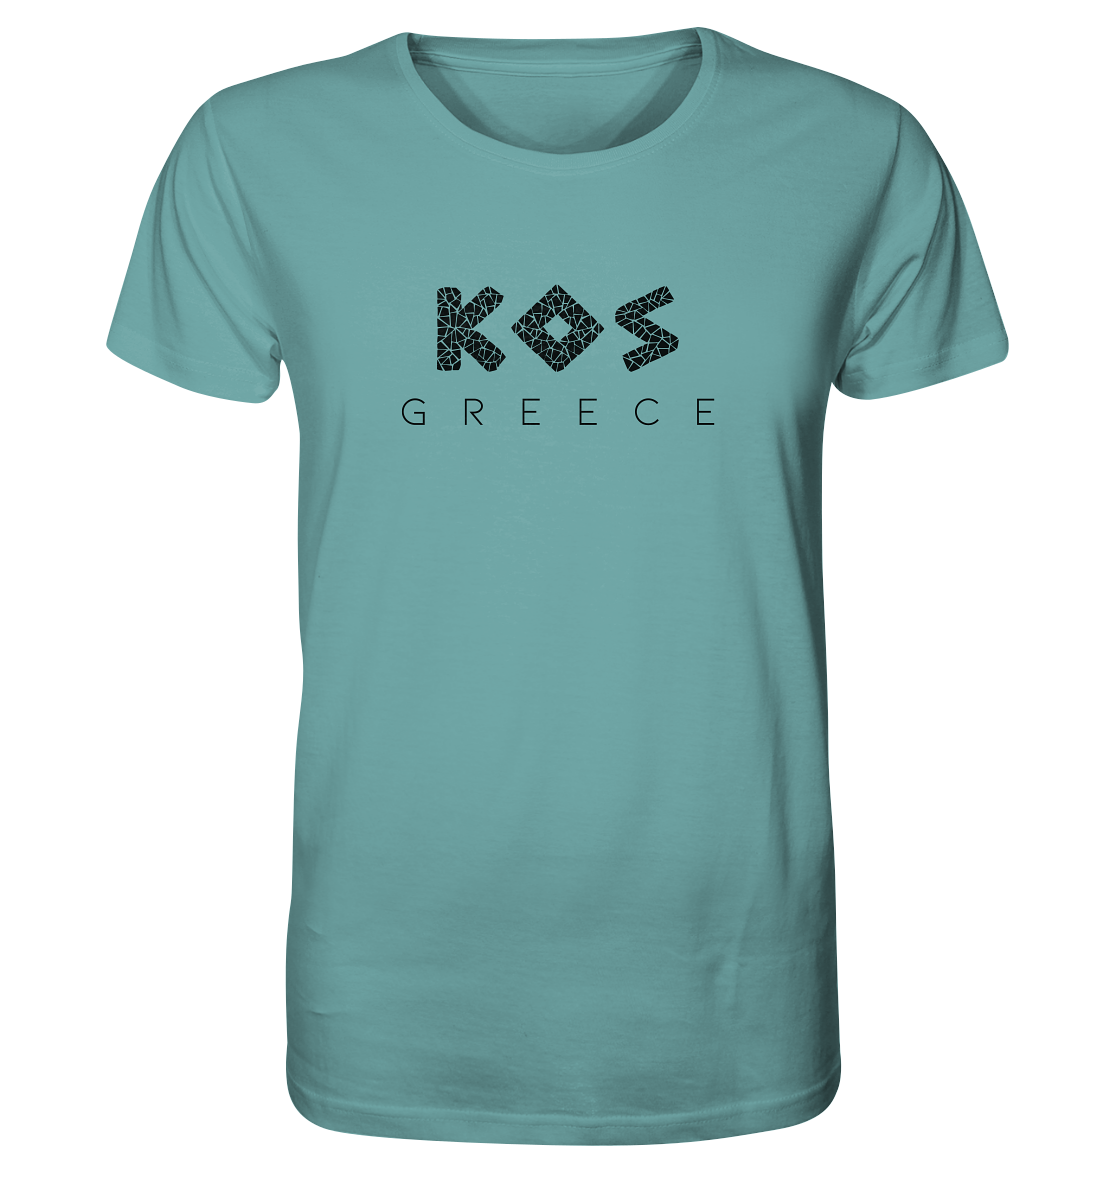 Kos Greece Mosaik - Organic Shirt